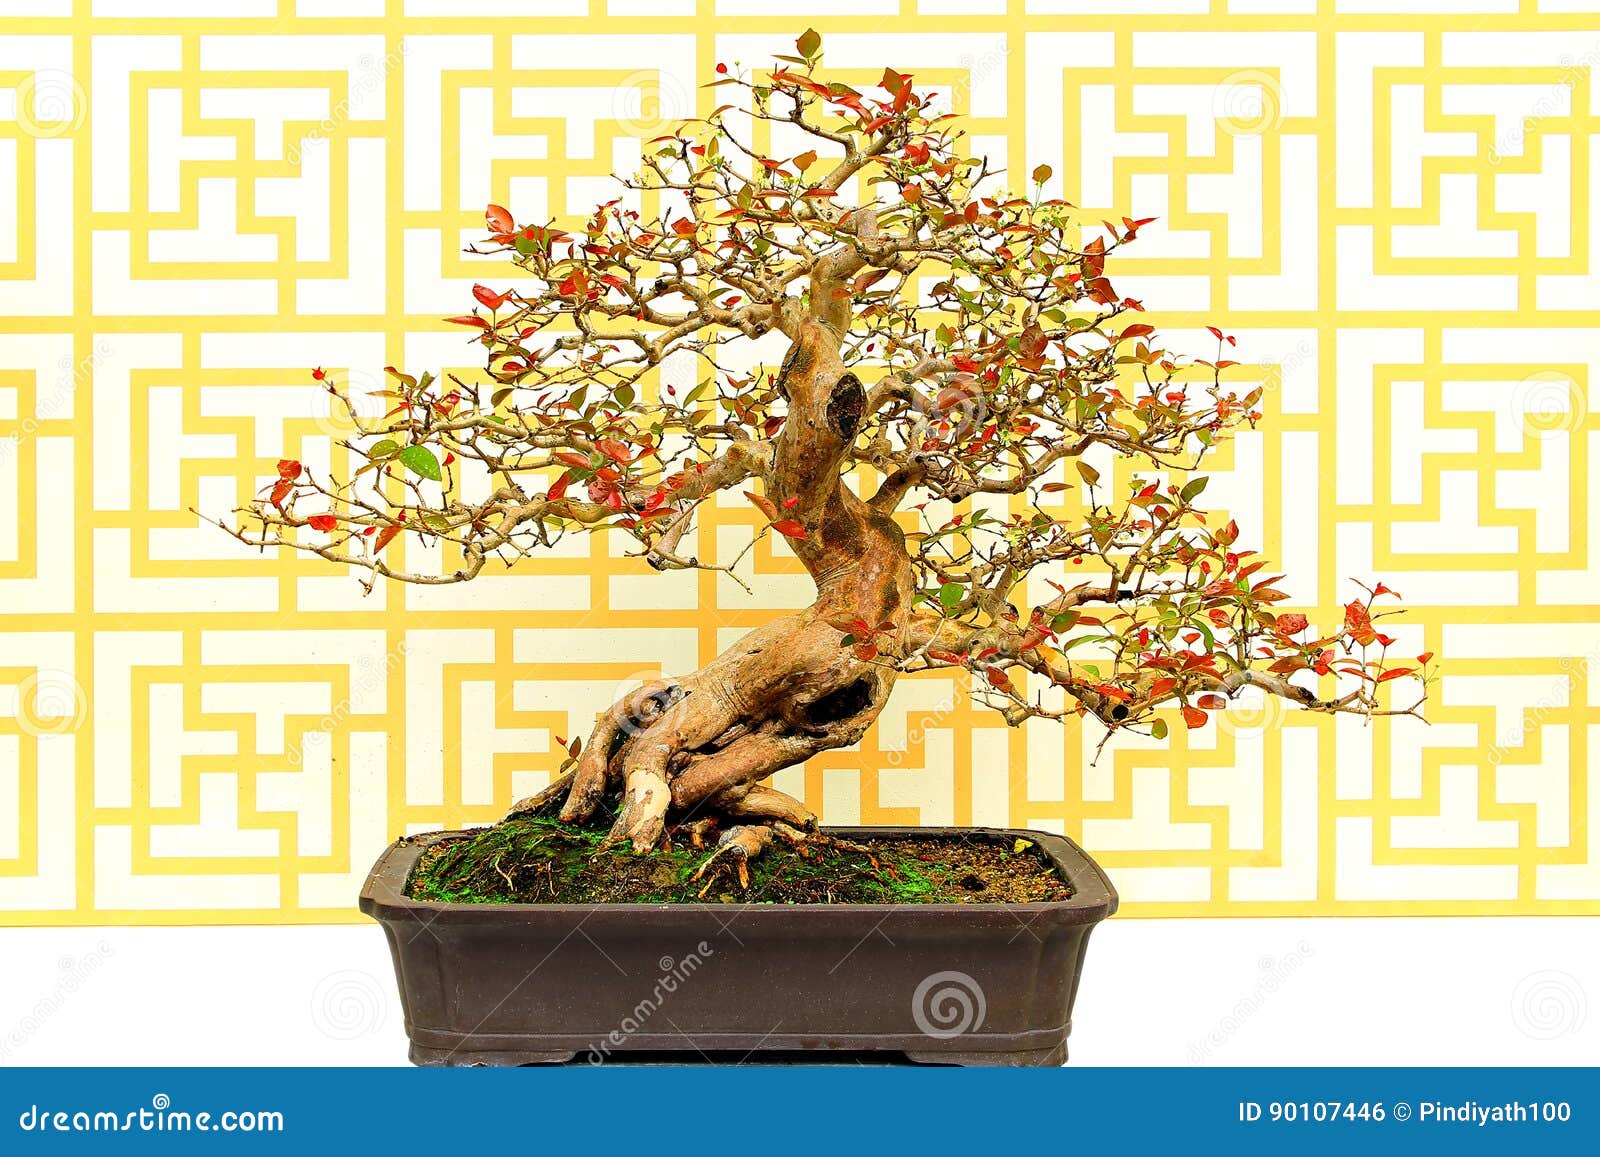 surinam cherry eugenia uniflora bonsai plant